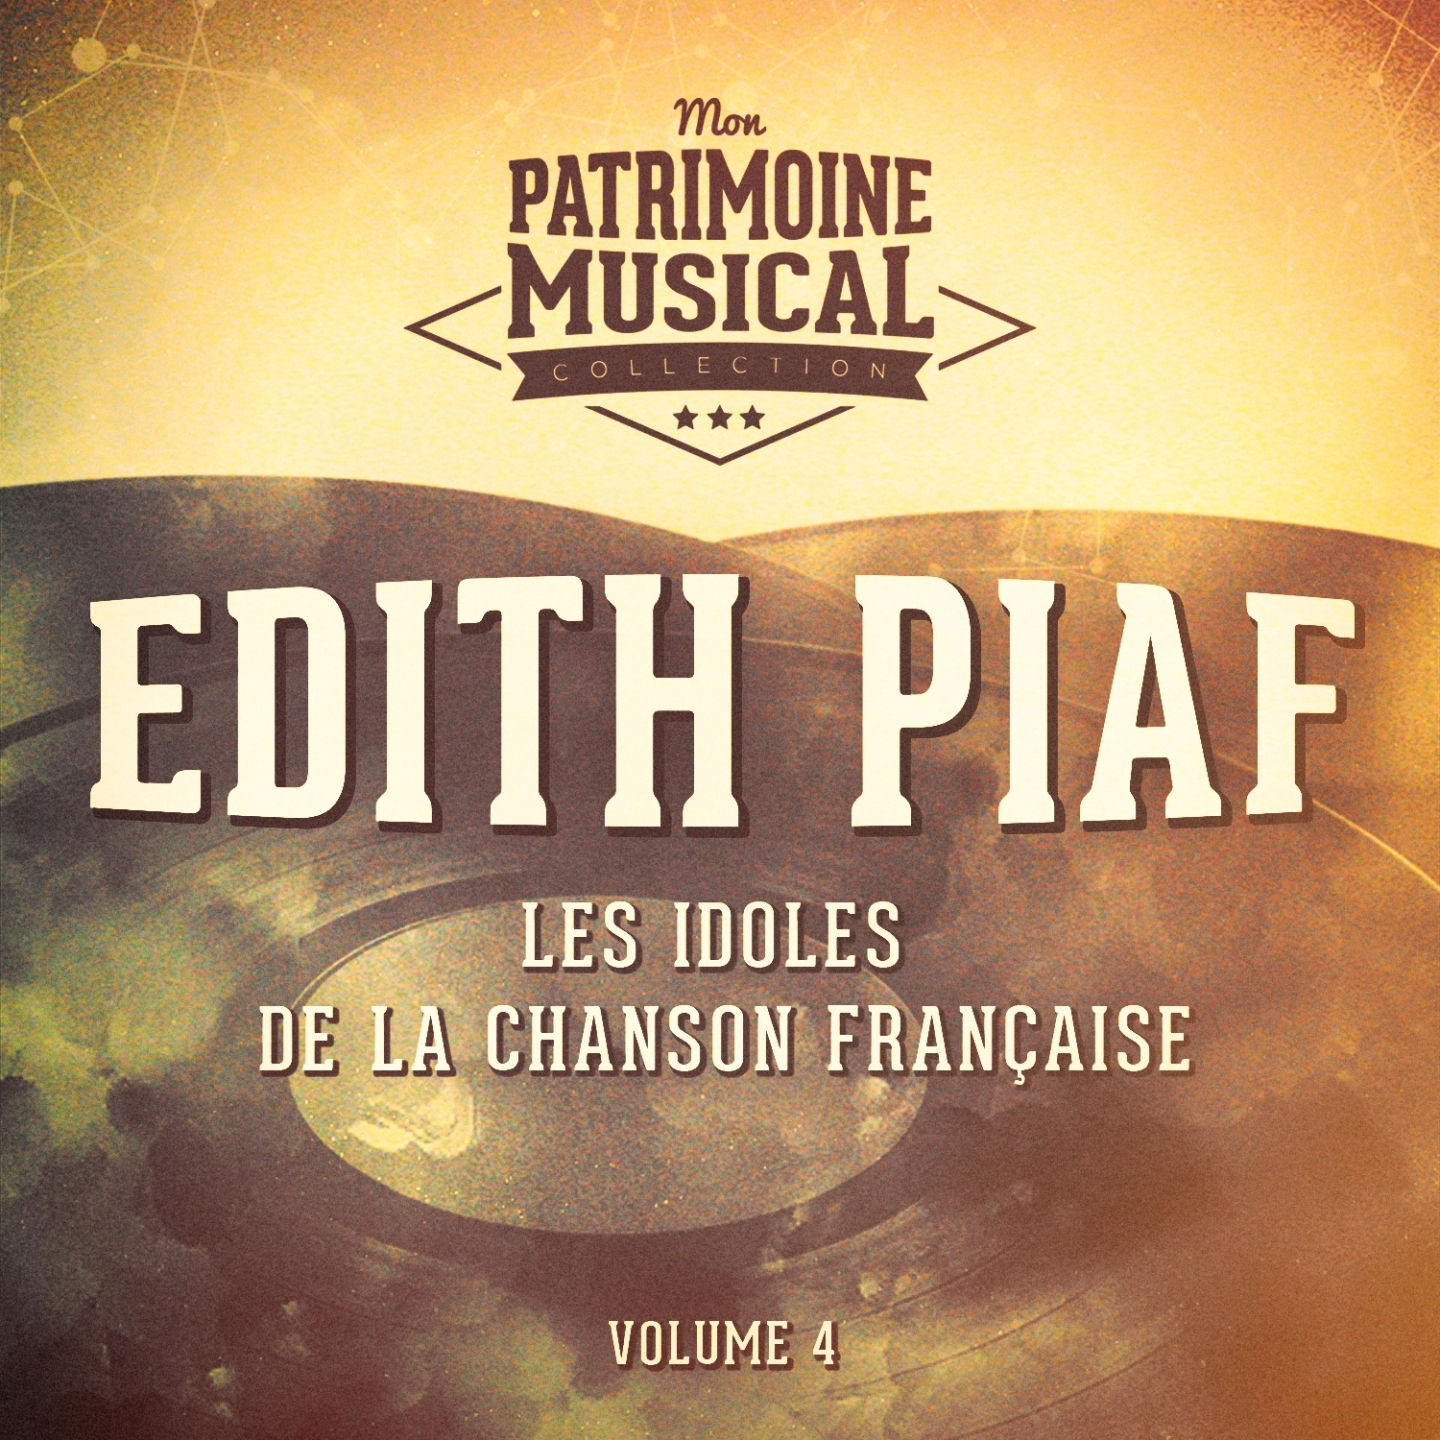 Les idoles de la chanson française : Edith Piaf, Vol. 4